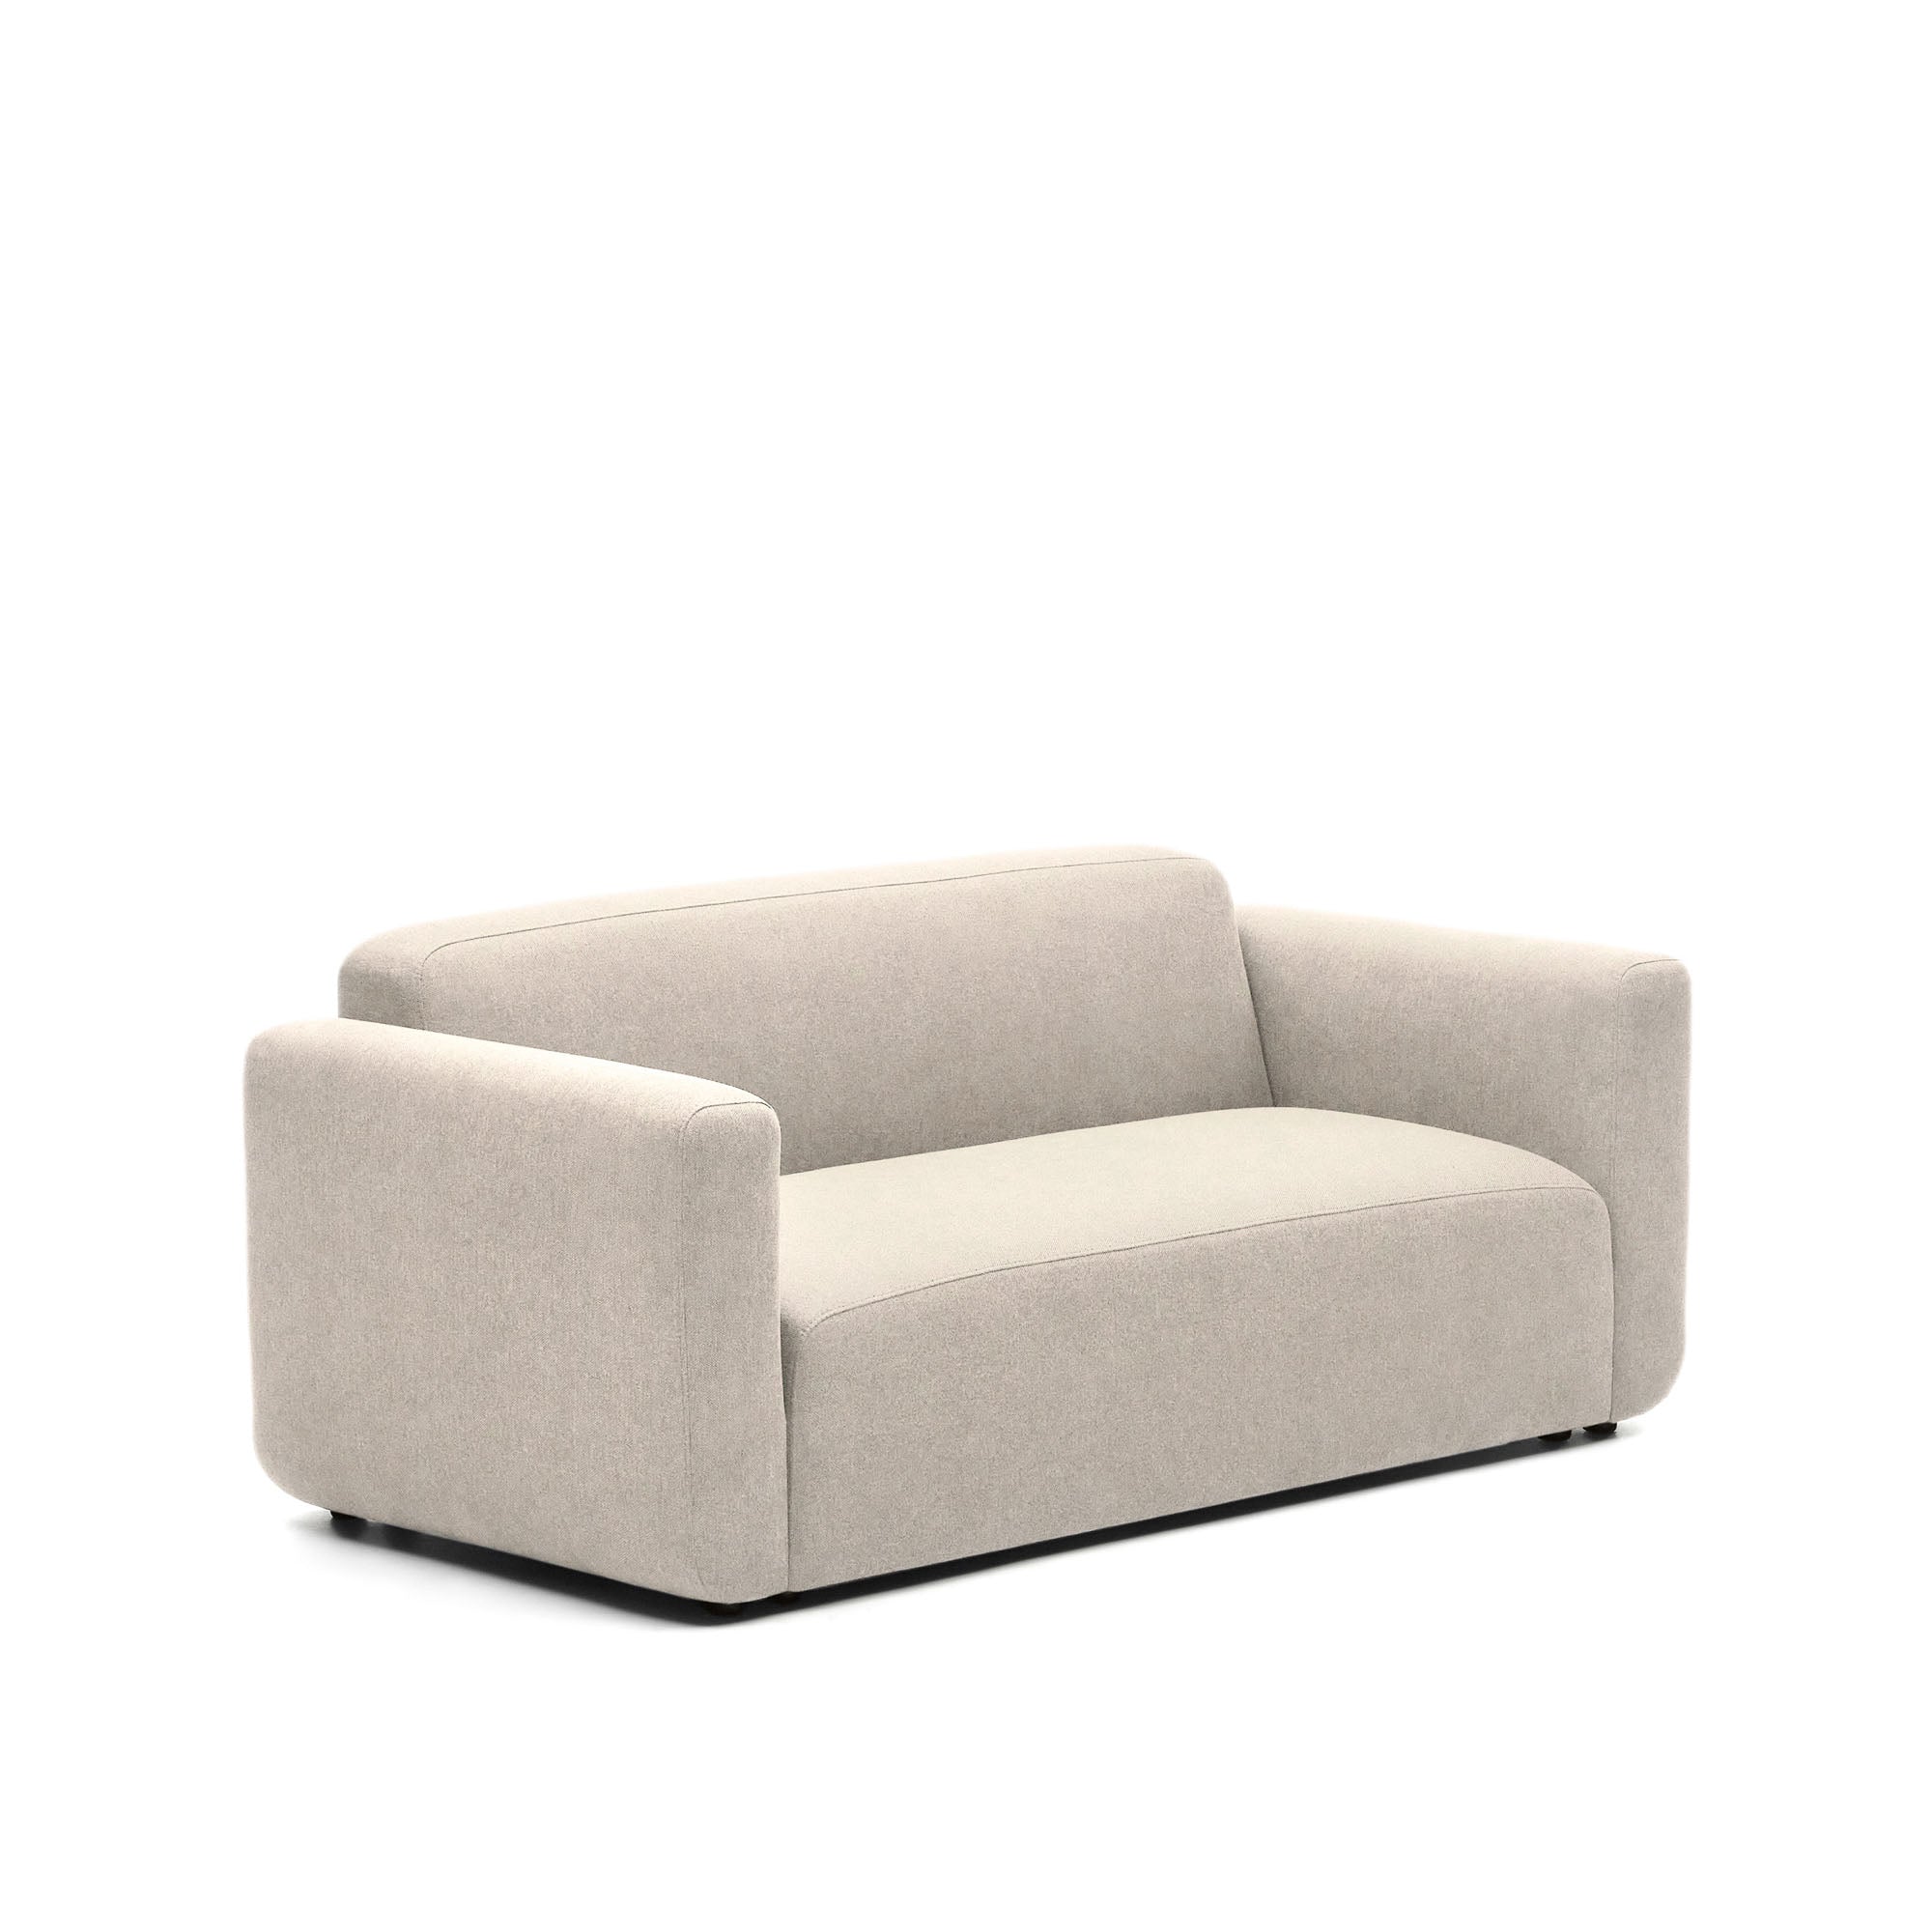 Neom 2 seater modular sofa in beige, 188 cm